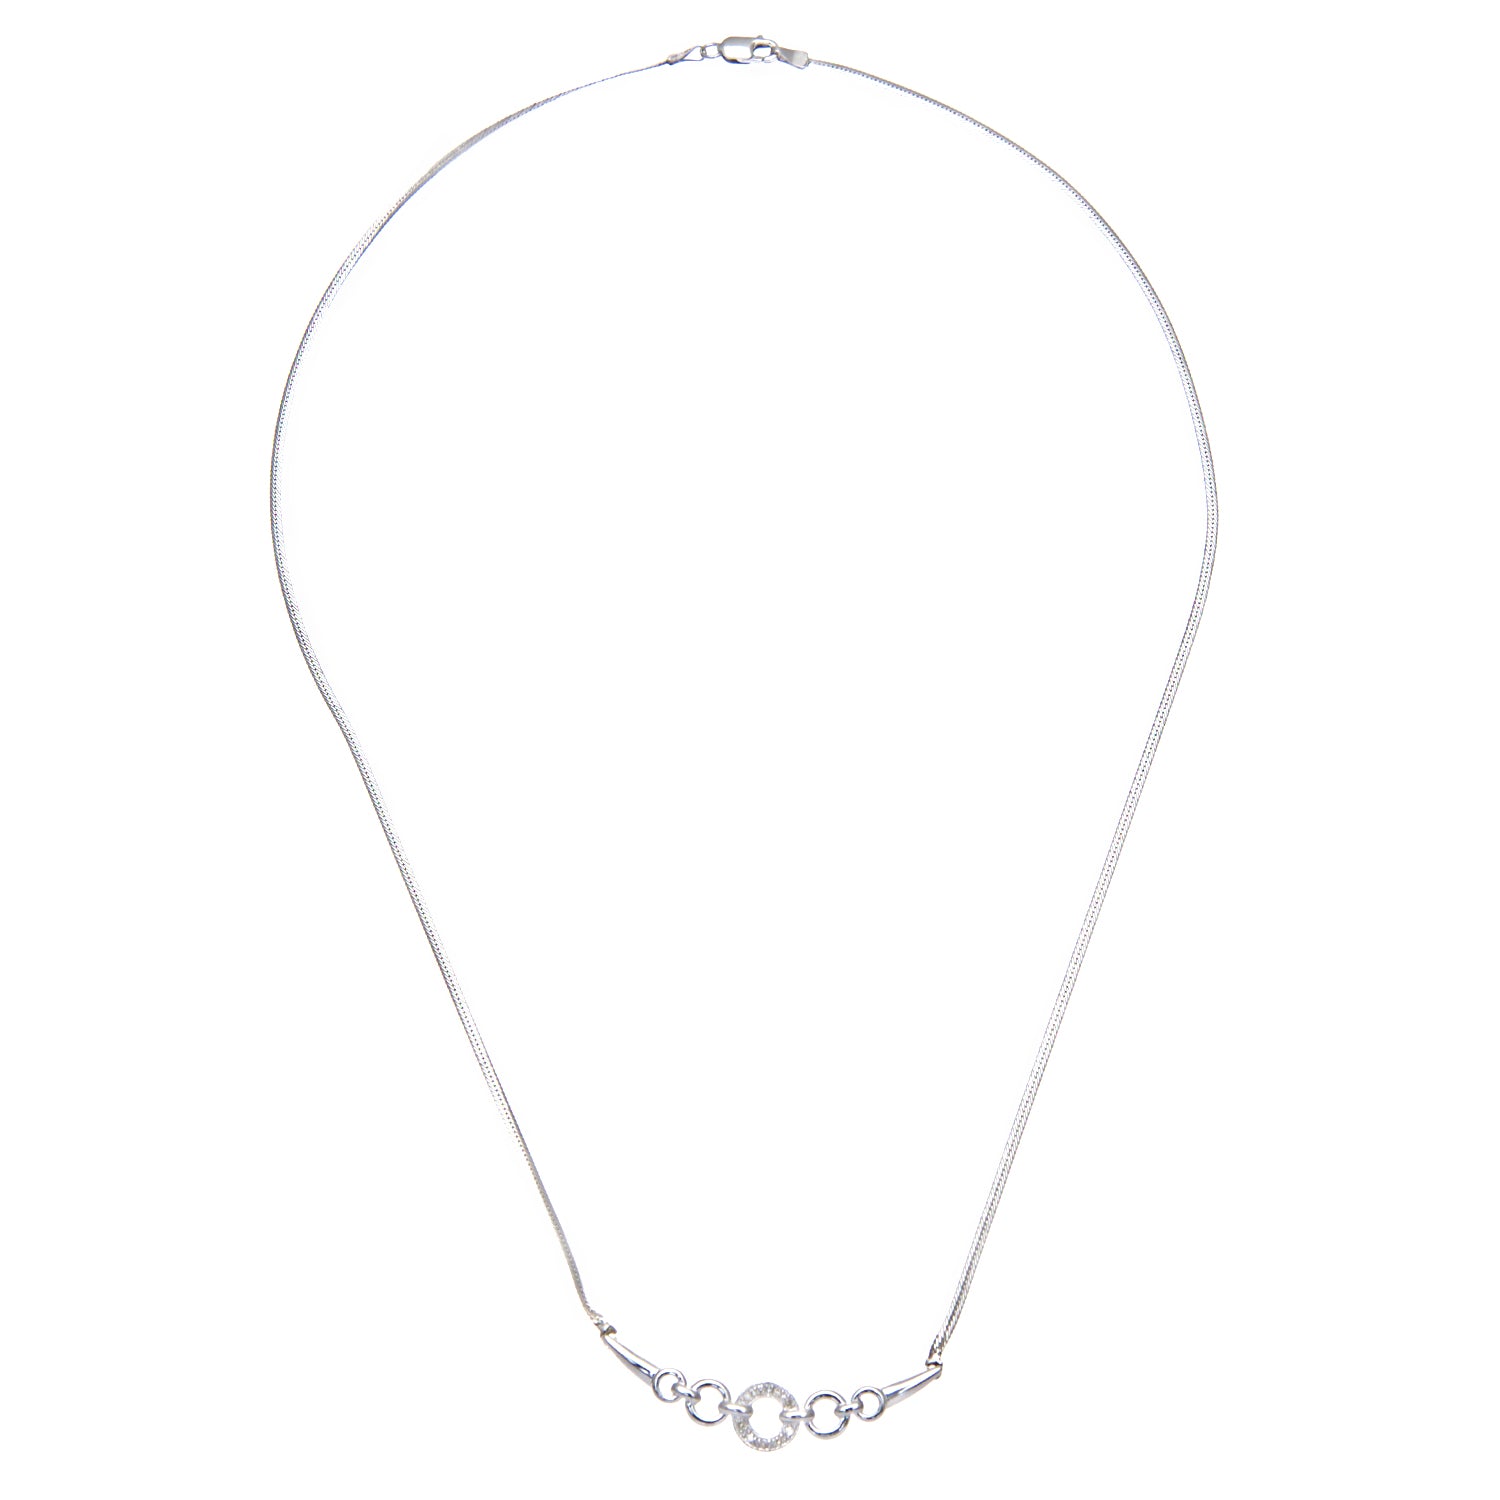 9ct White Gold  5pts Diamond Circle Lavalier Necklace 18 inch - PNEAXL01520W